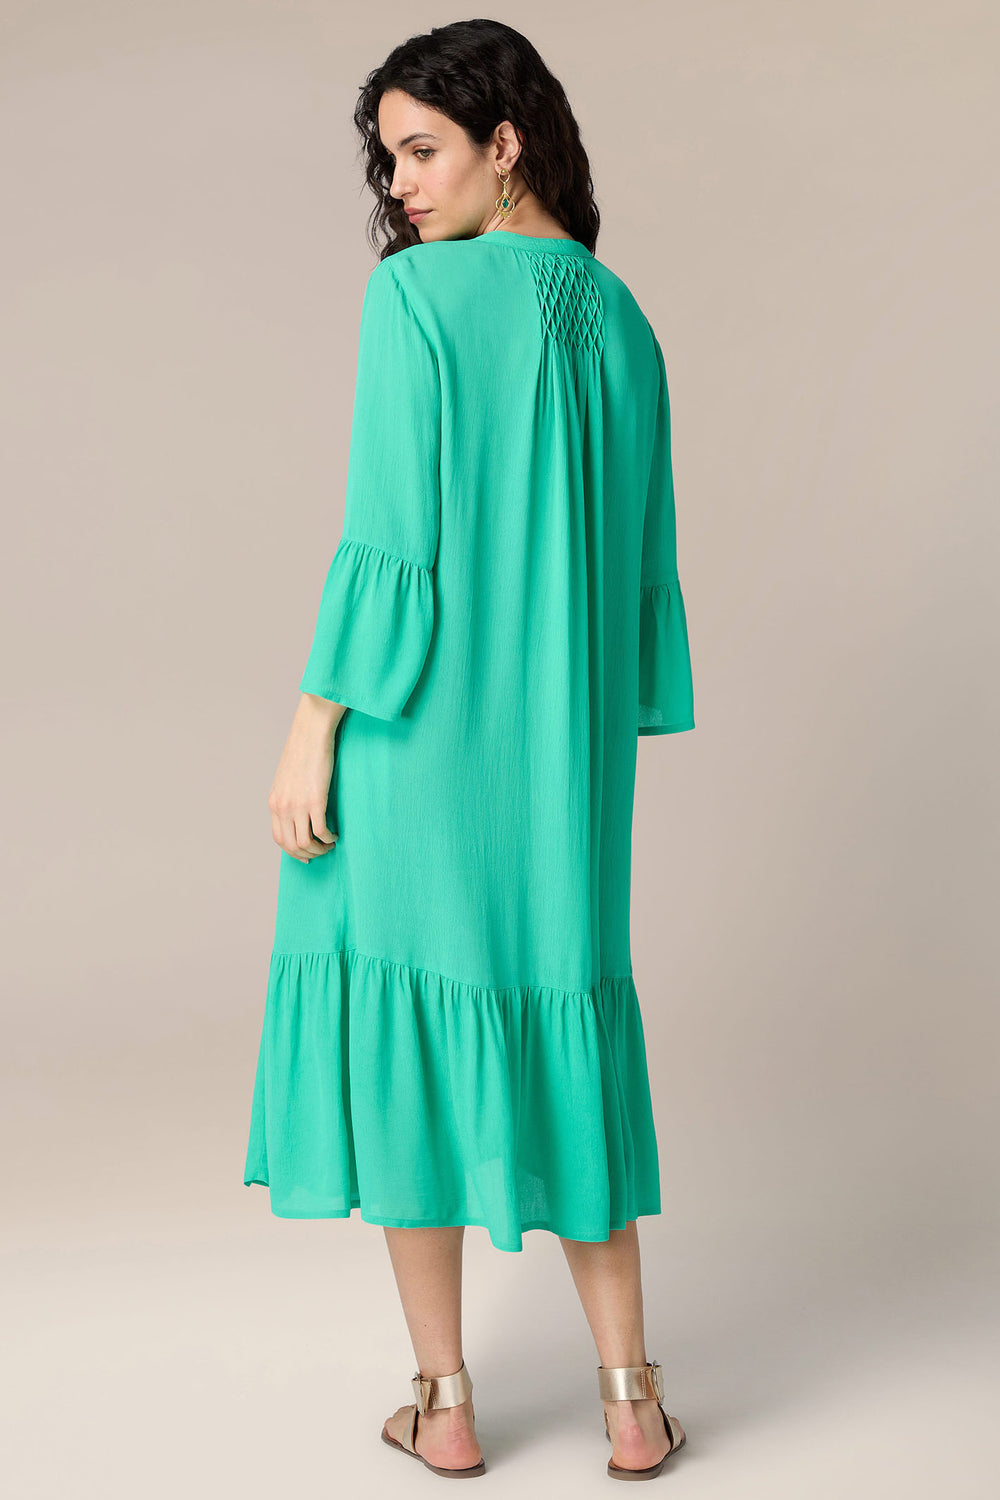 Sahara GRD5581-MOD Emerald Green Morrocain Smocked Dress - Experience Boutique